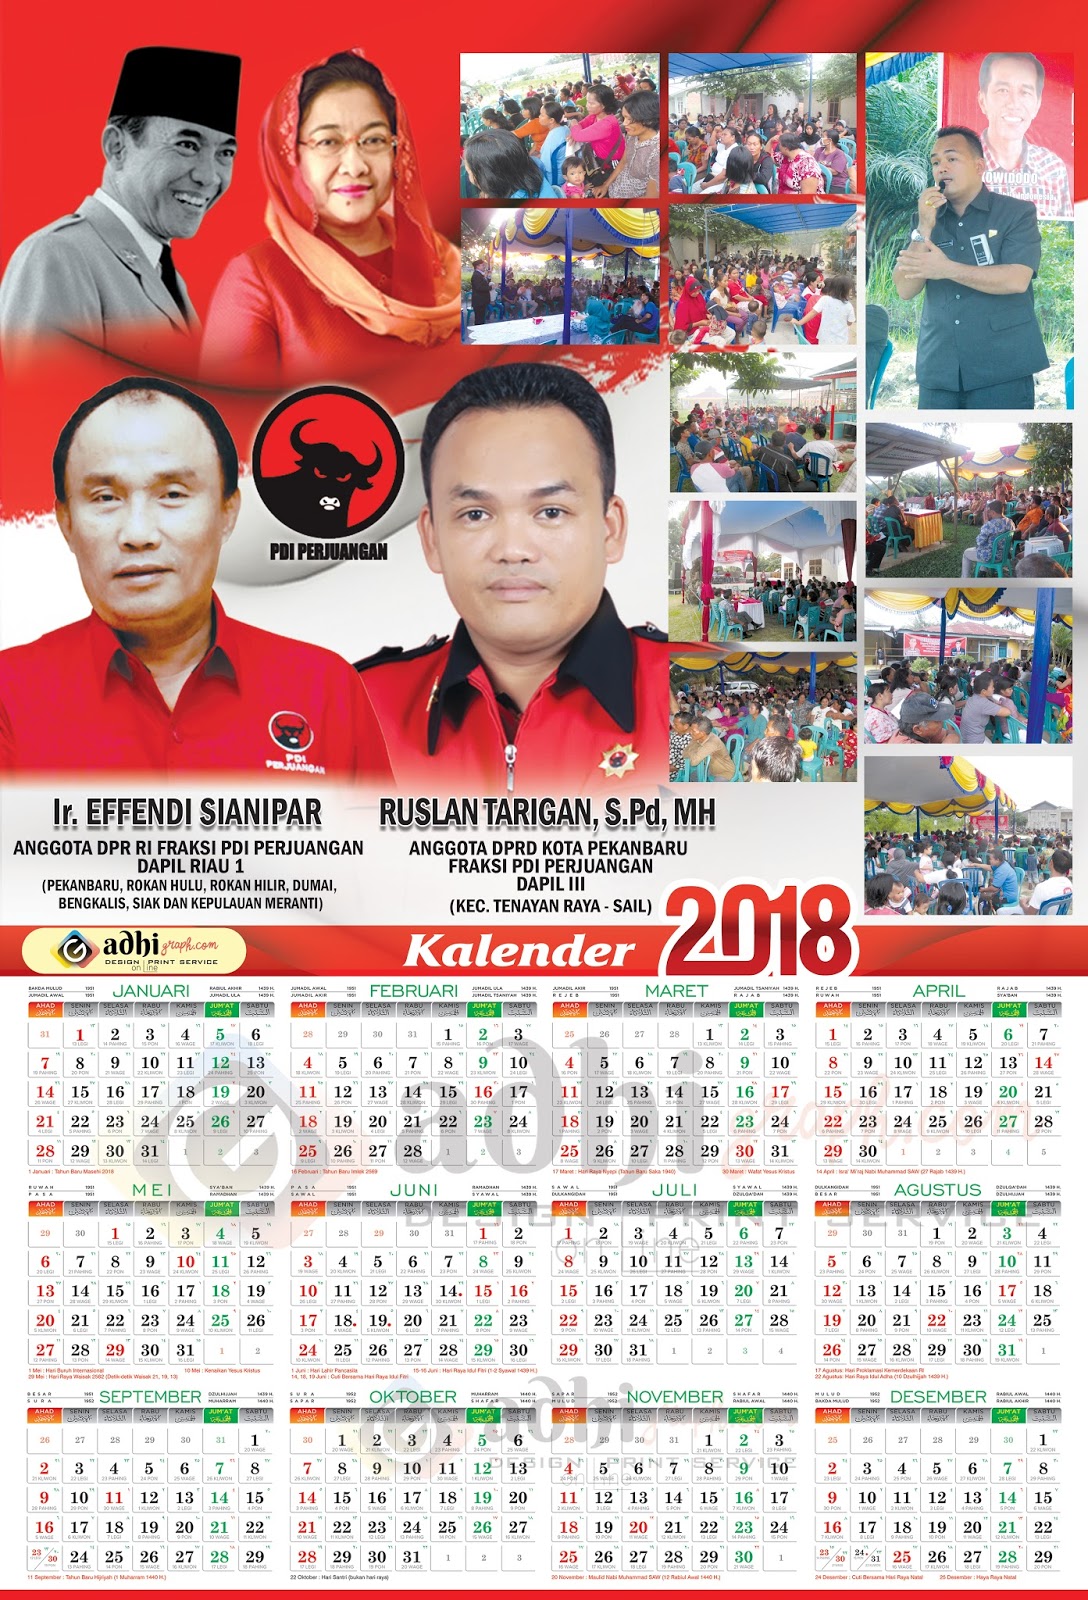 Kalender Anggota DPRD Kota Pekanbaru 2018 ~ Adhigraph